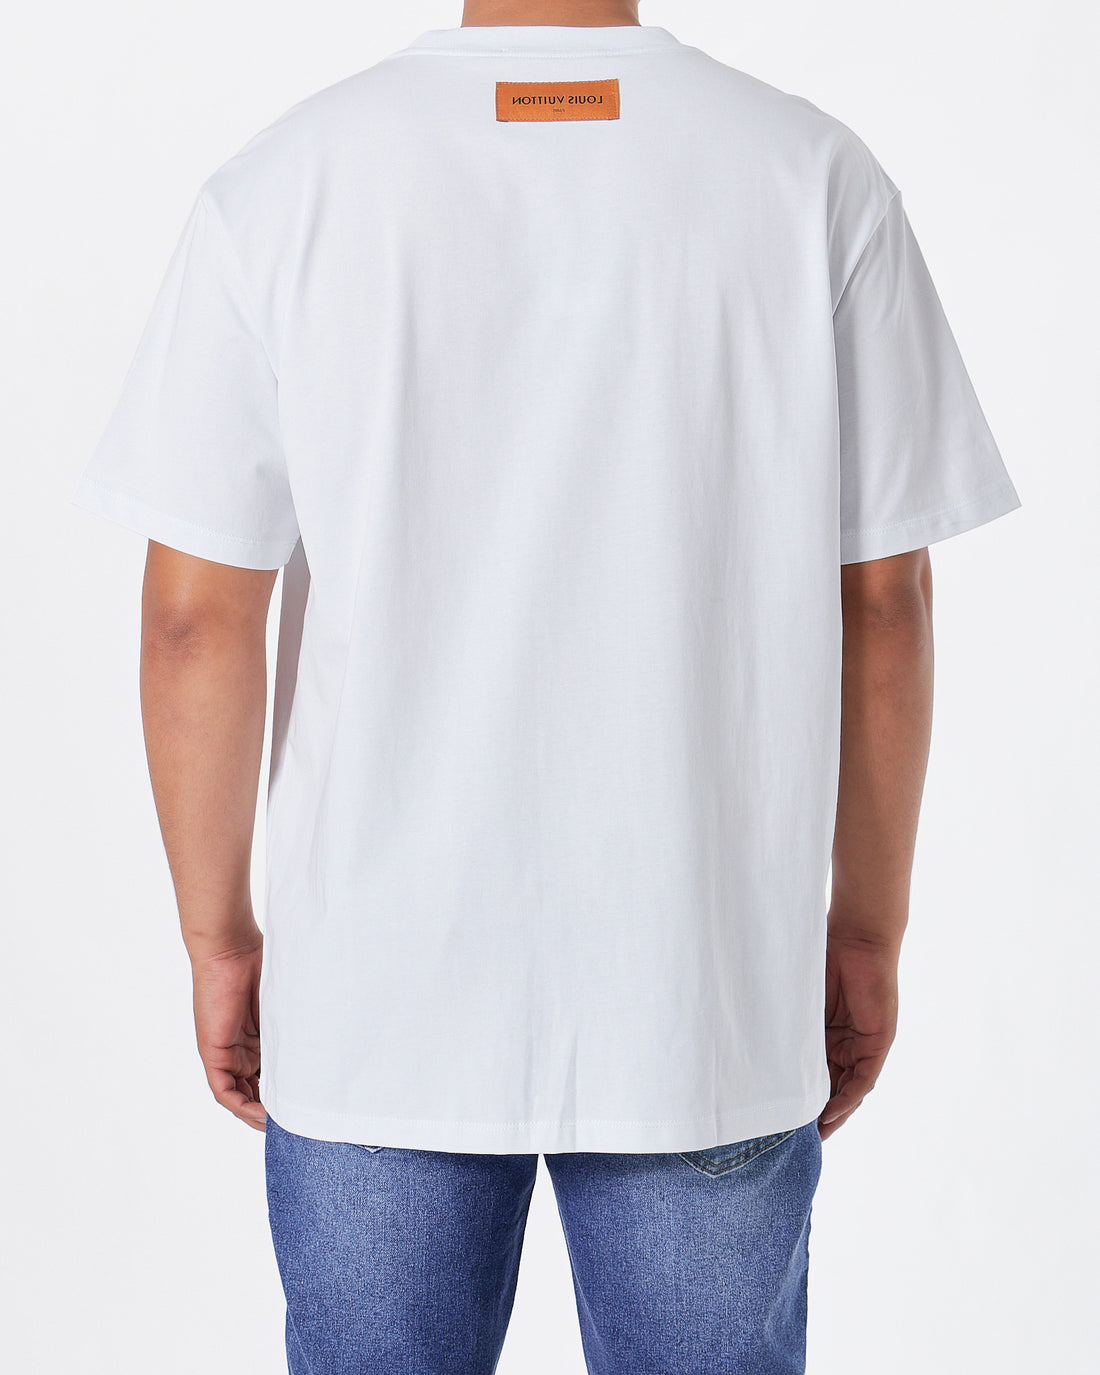 LV Pumpkins Printed Men White T-Shirt 23.90